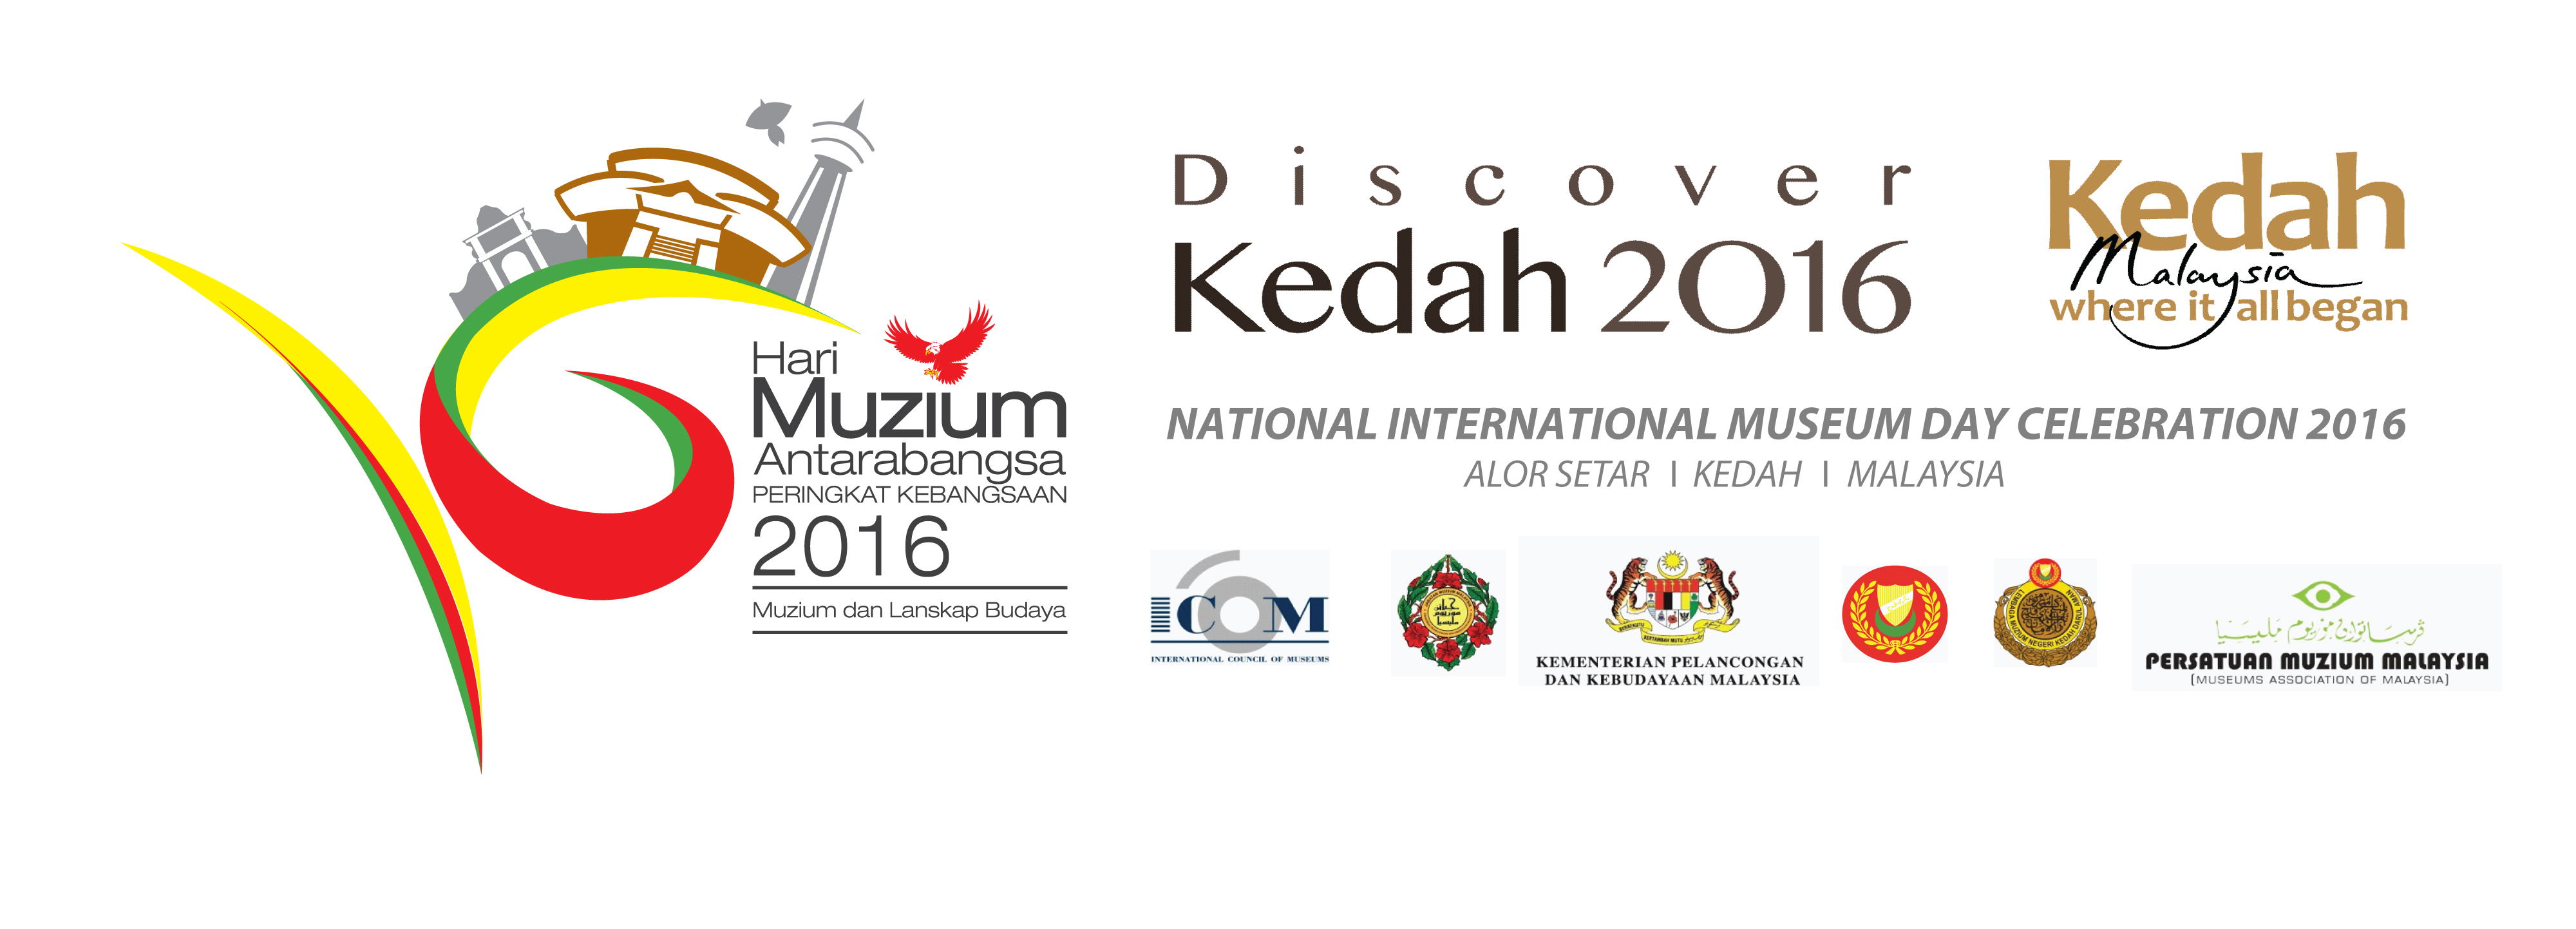 National International Museum Day Celebration 2016 Kedah